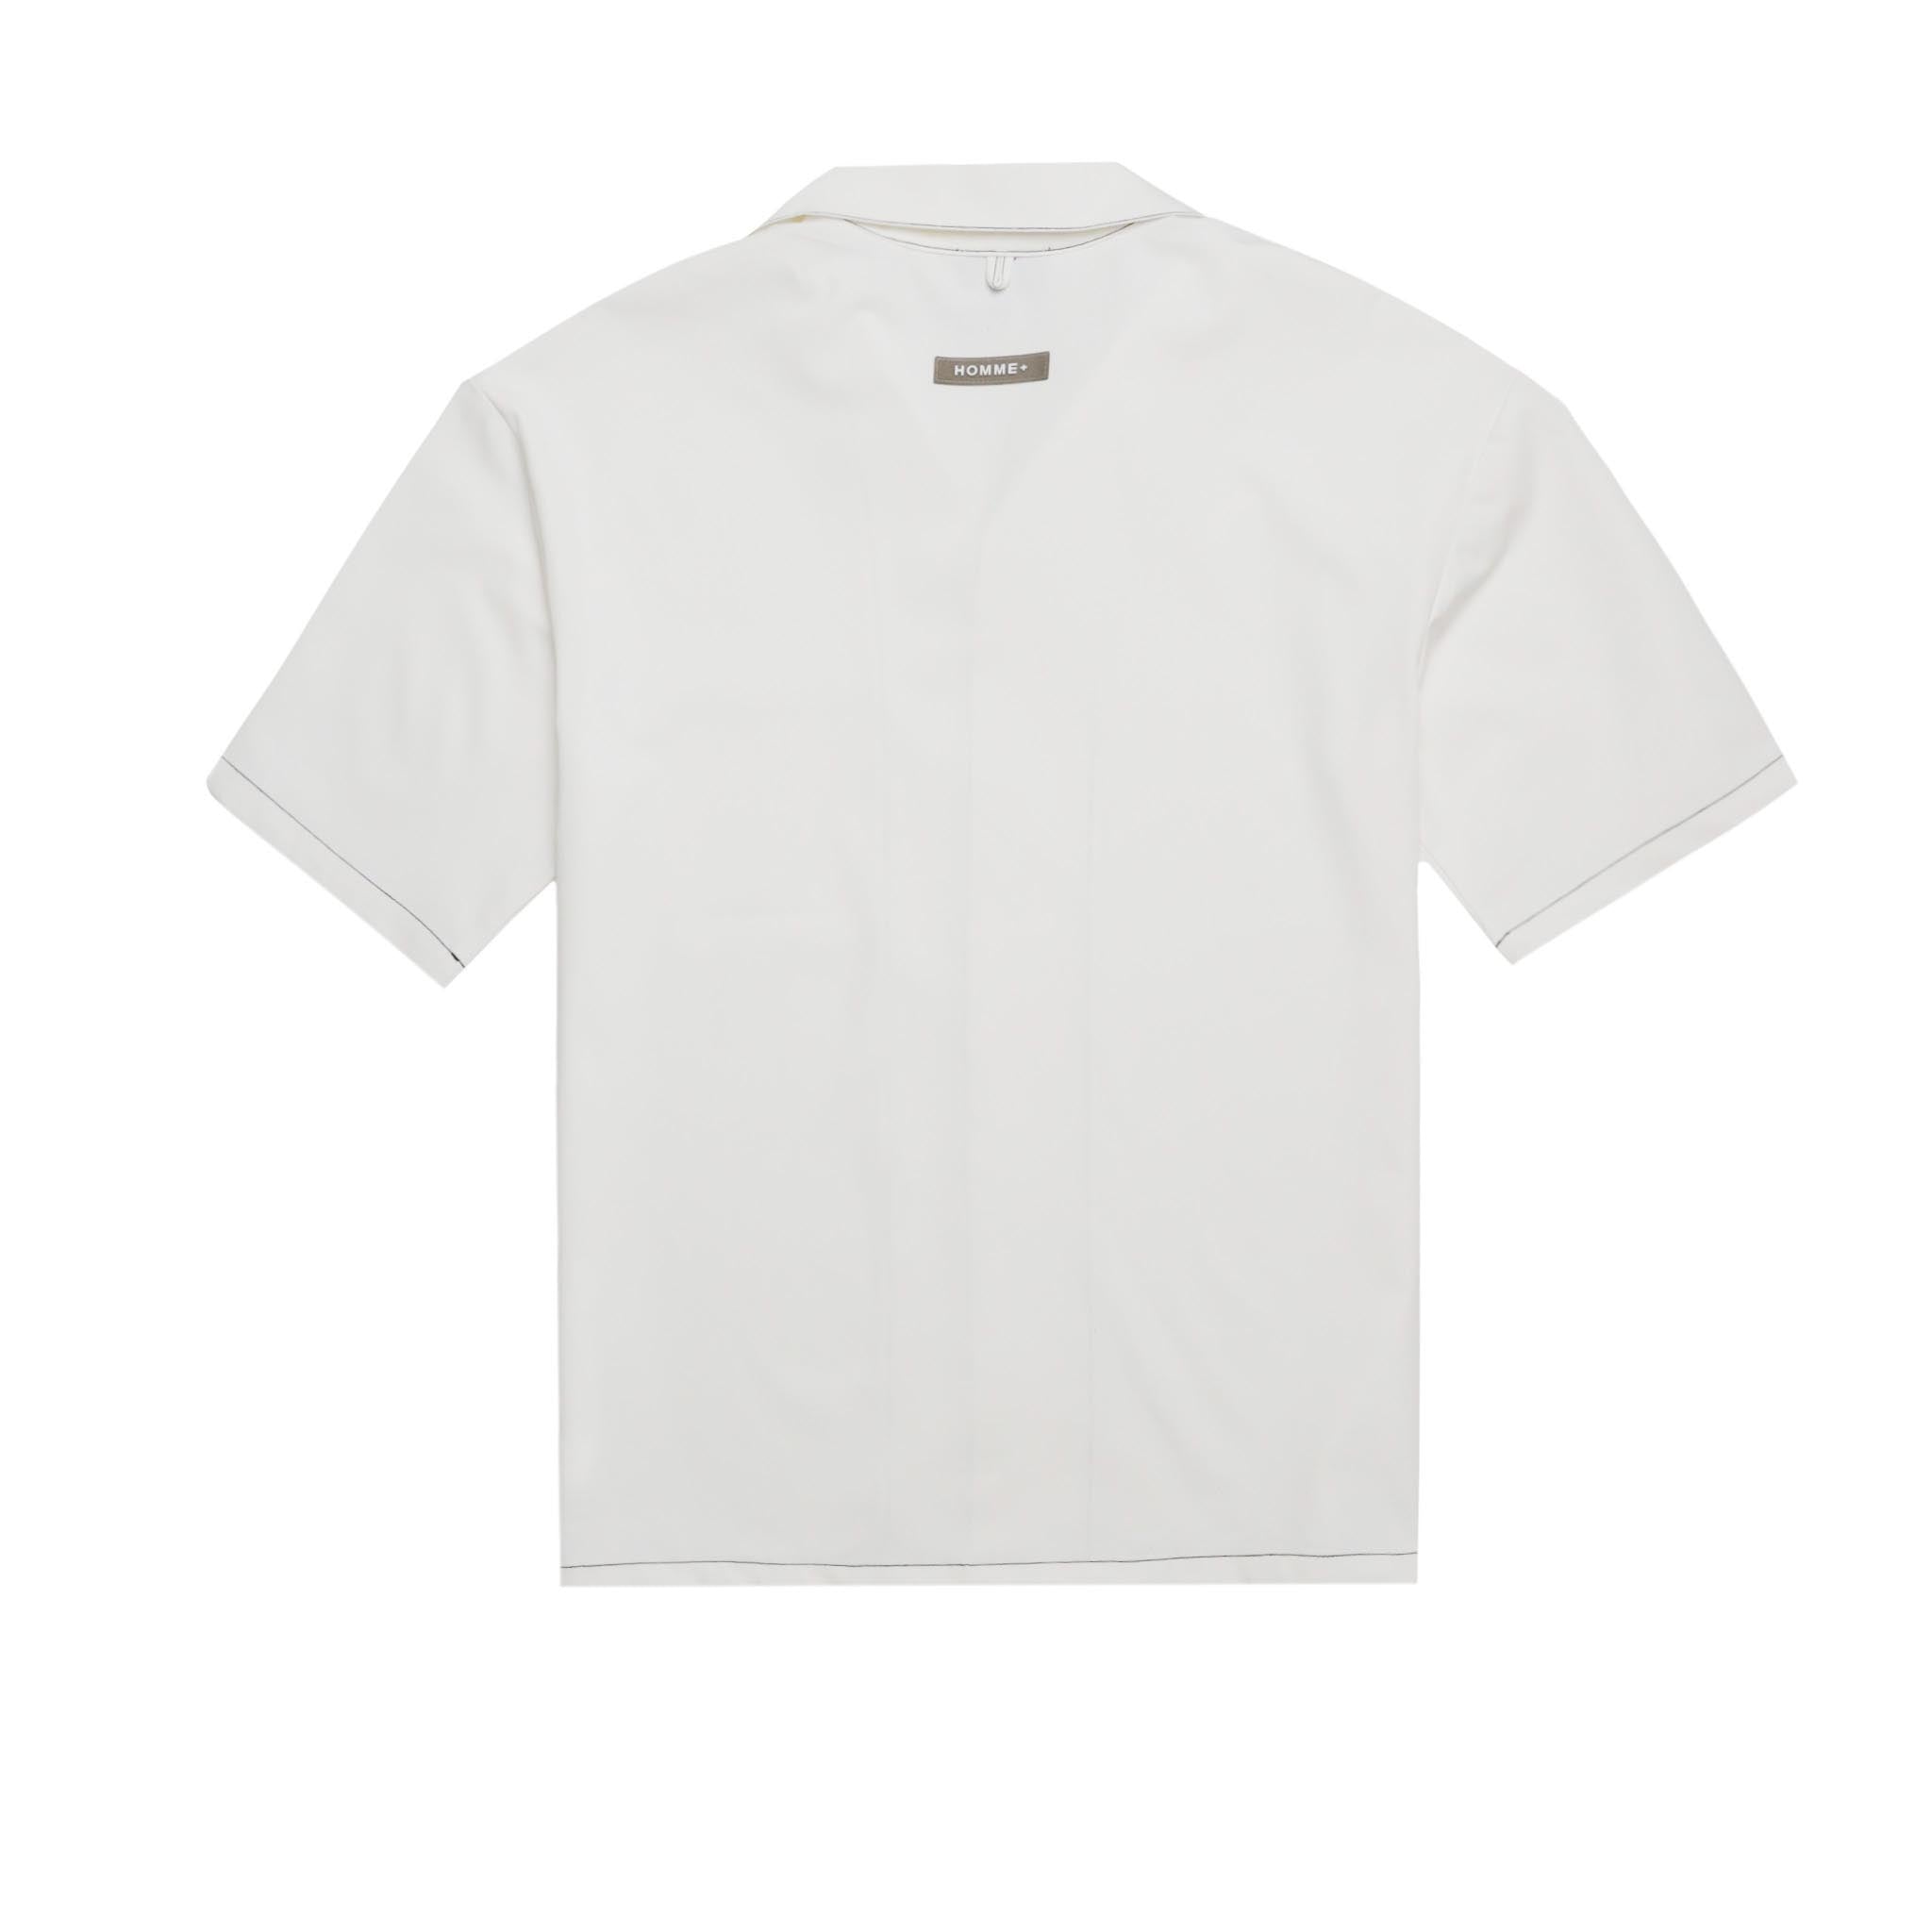 HOMME+ Contrast Stitch Short Sleeve Shirt White